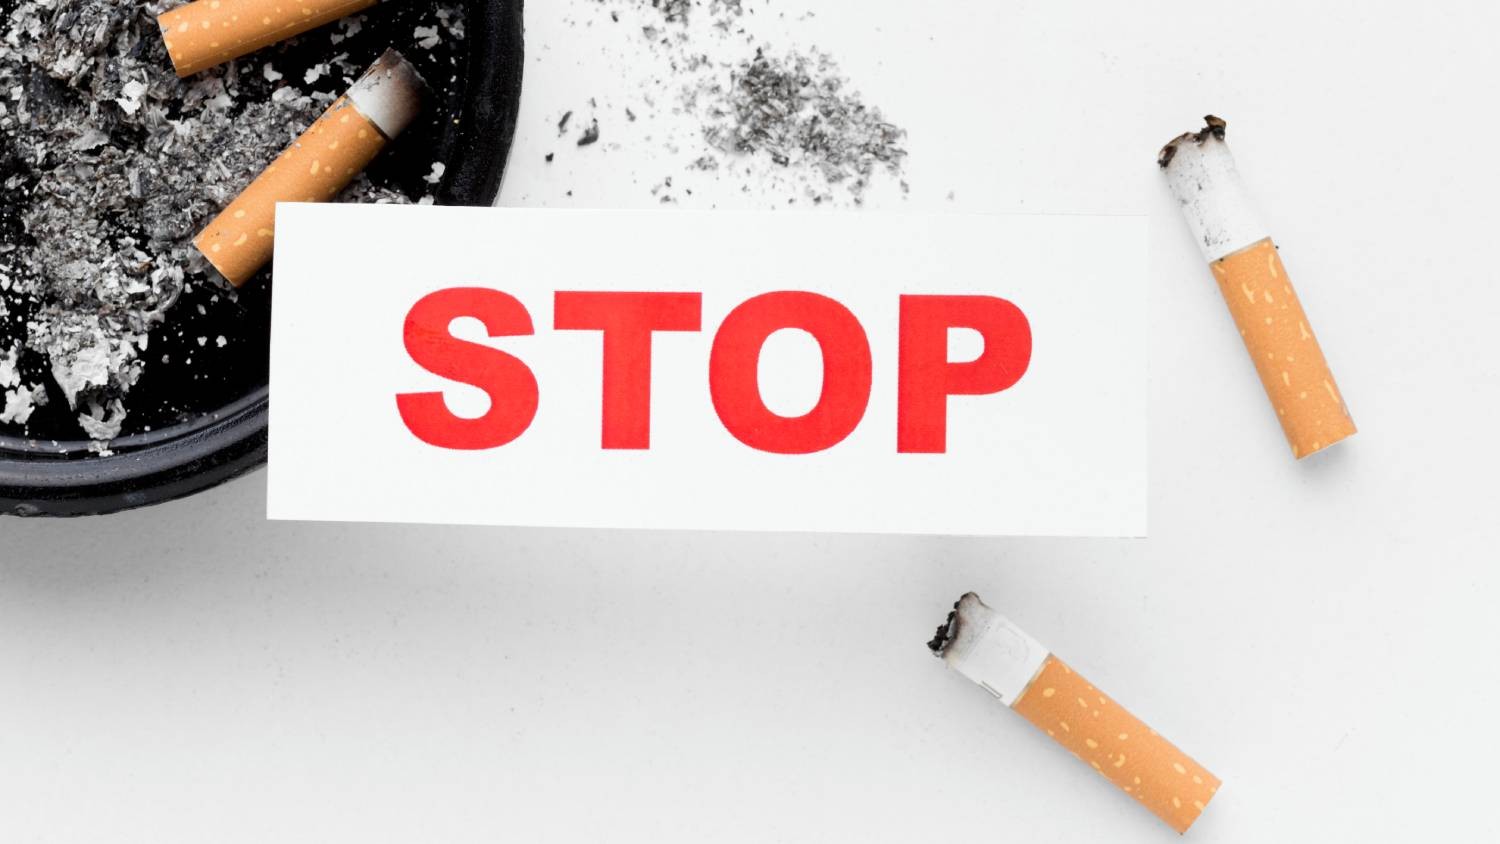 Guideline focus (NICE): Stop smoking interventions